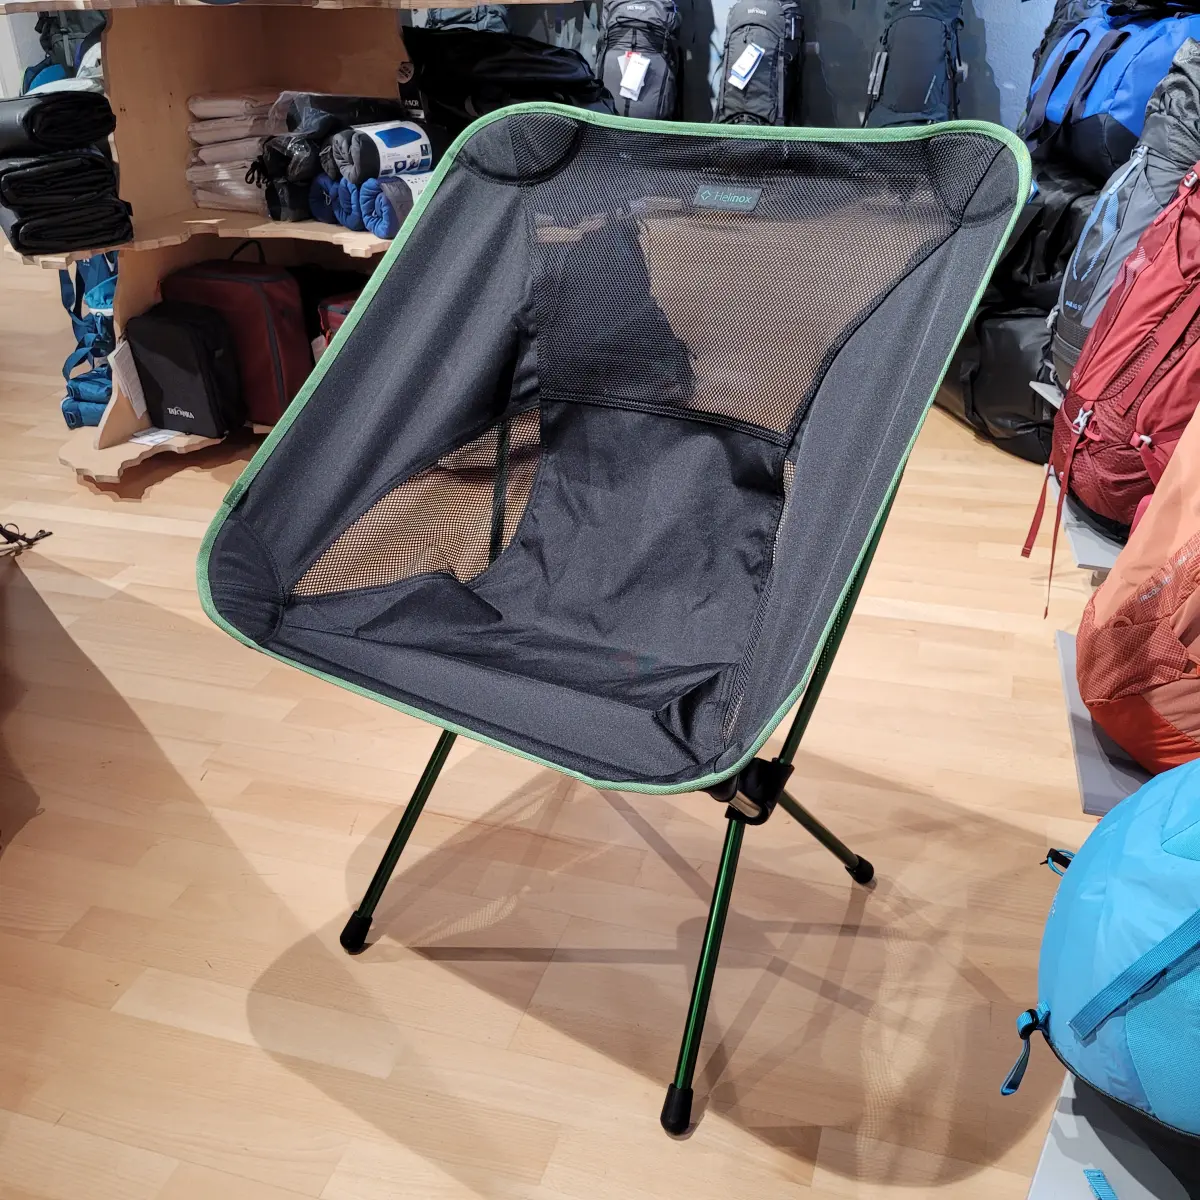 Campingstuhl Chair One XL